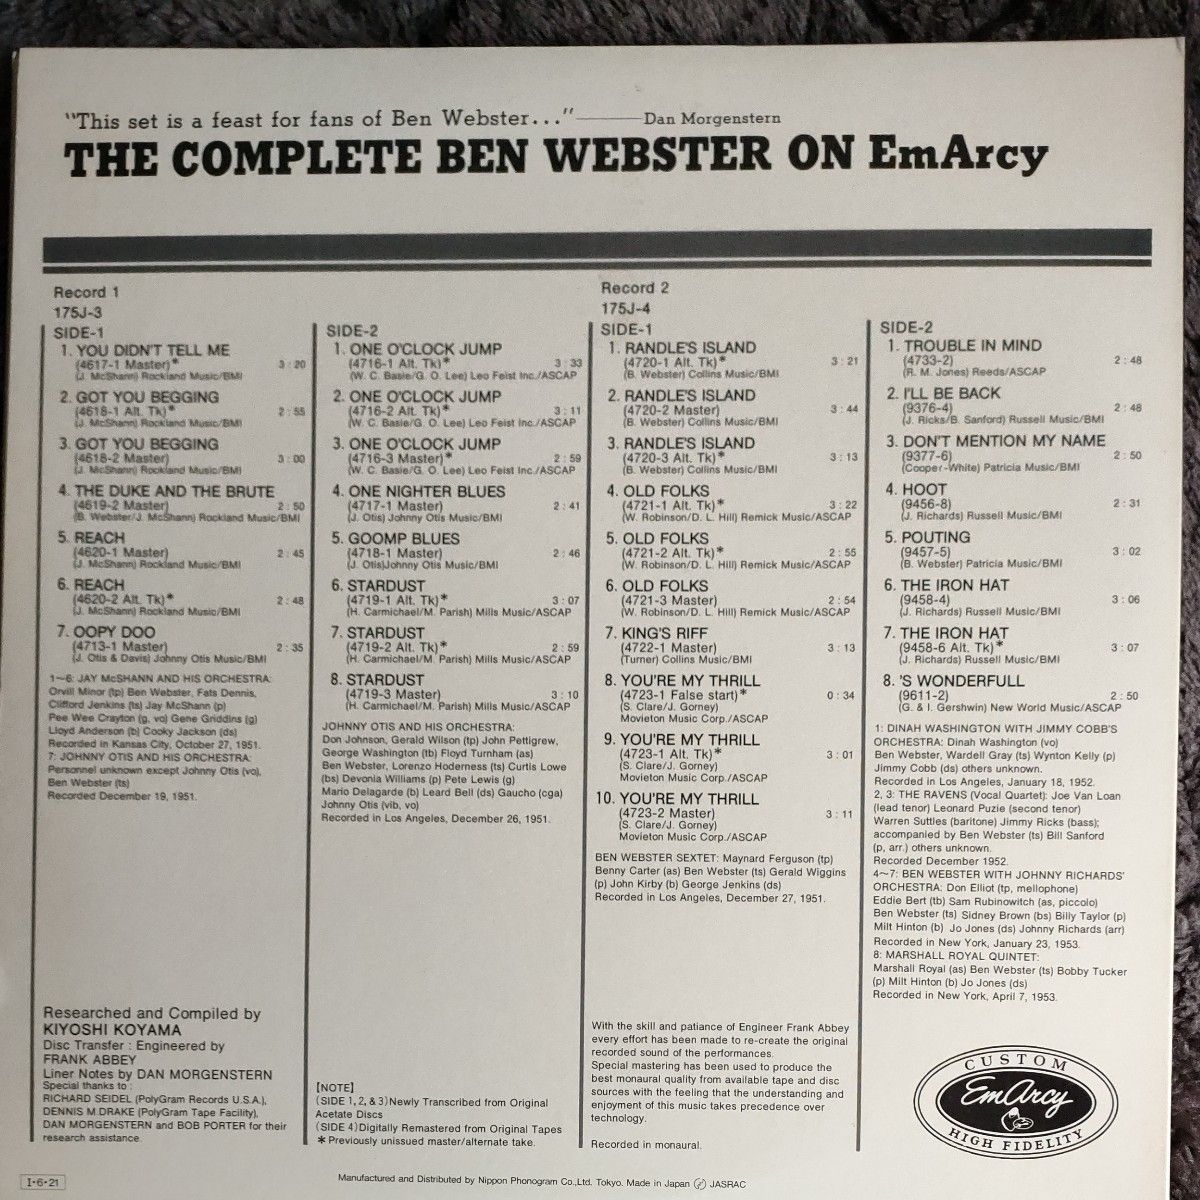 The Complete Ben WebsterON EMARCY /帯付 2枚組LP: ベン ウェブスター 見本盤白盤